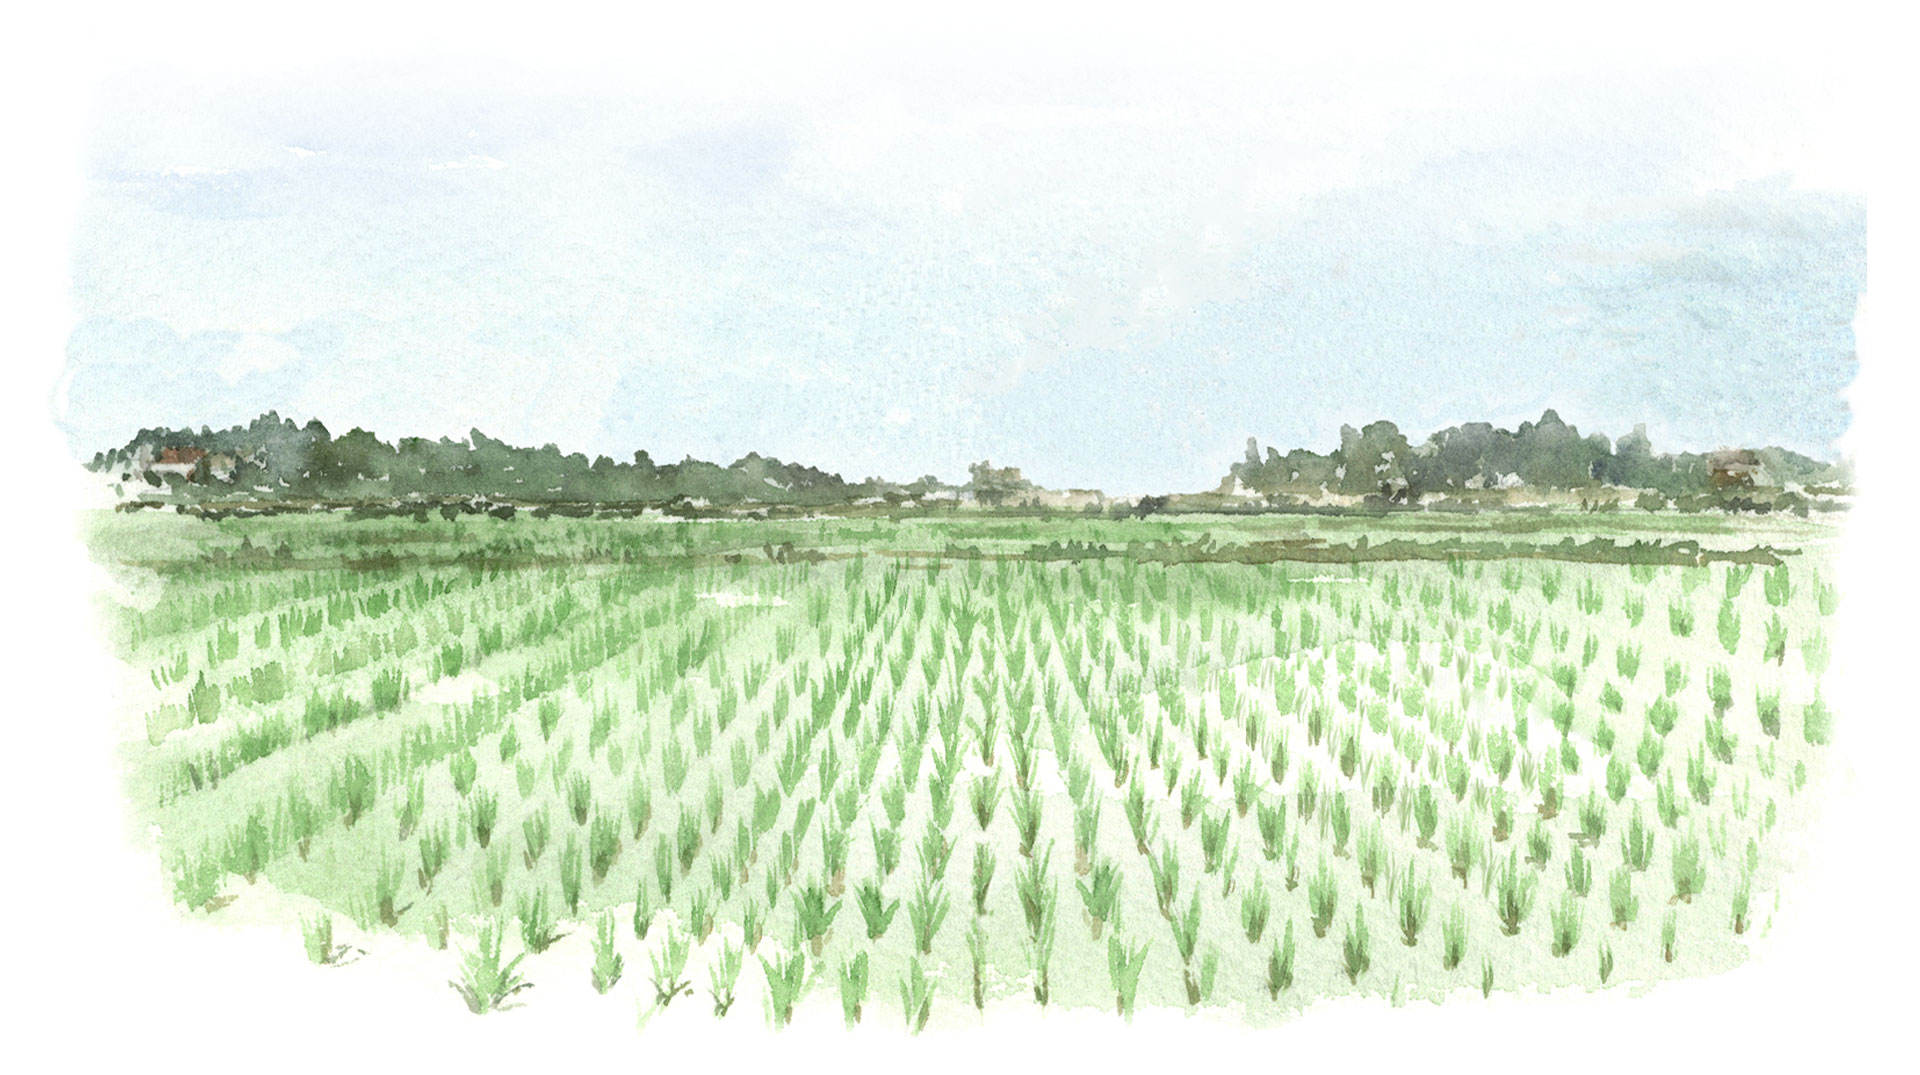 Illustrated farm image